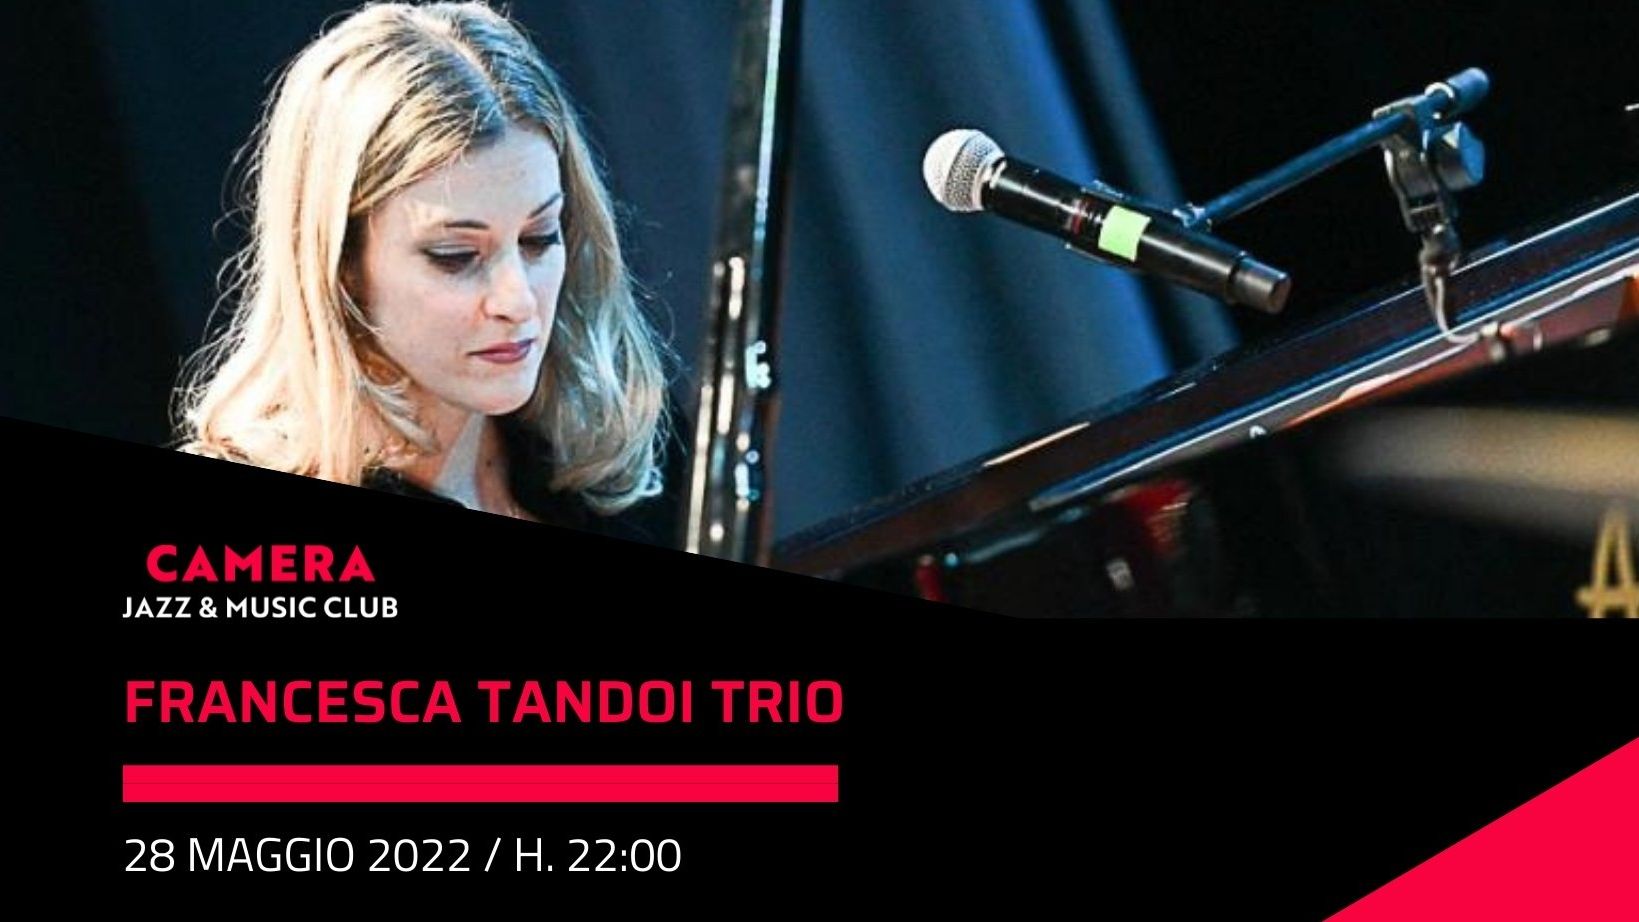 Francesca Tandoi Trio